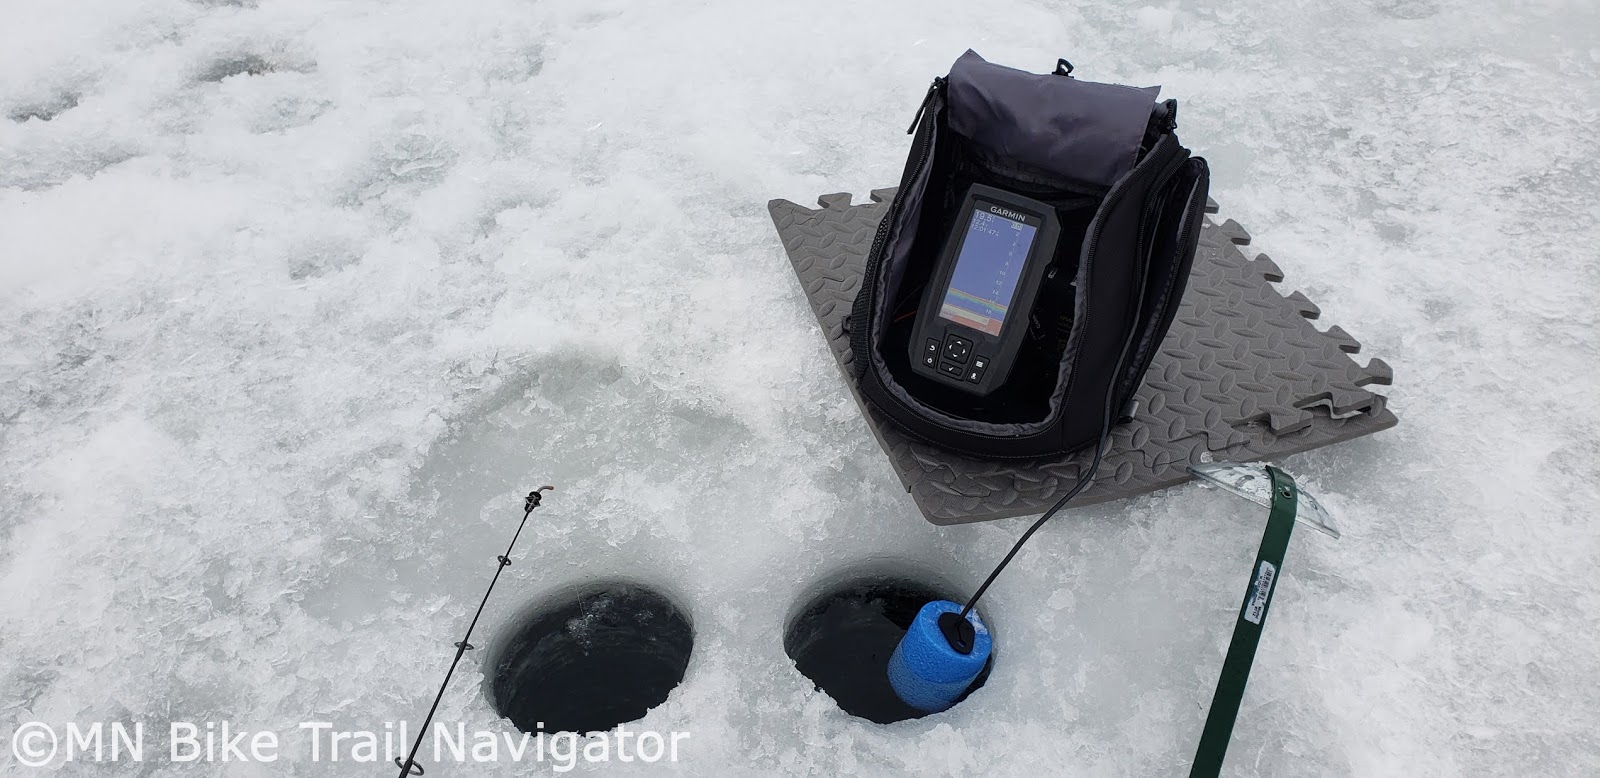 MN Bike Trail Navigator: Fatbike Ice Fishing and How to Do It